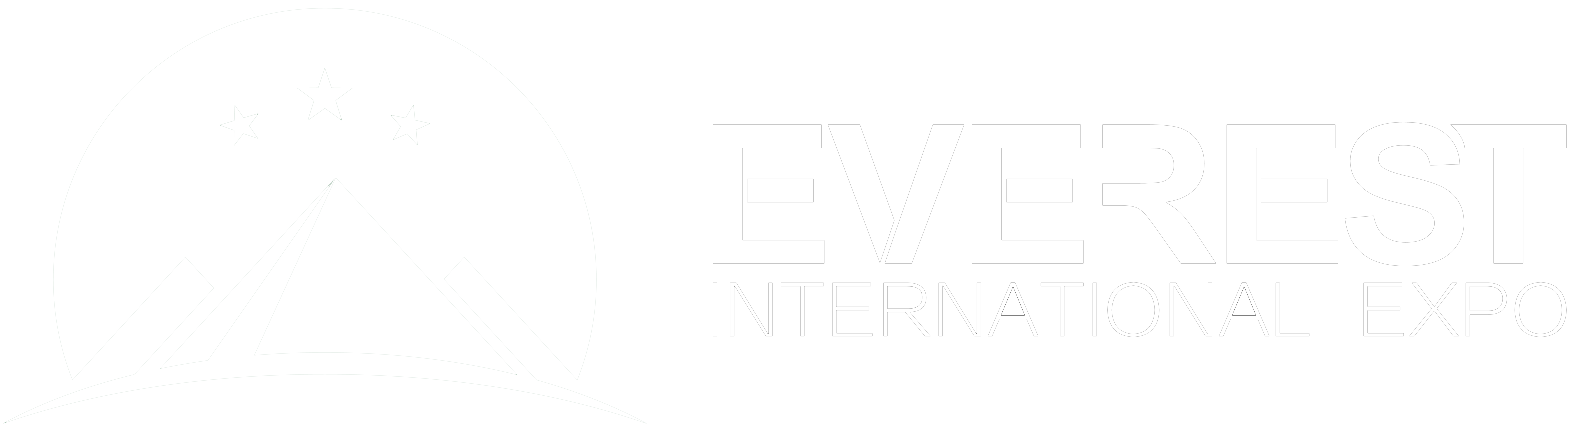 Everest Logo